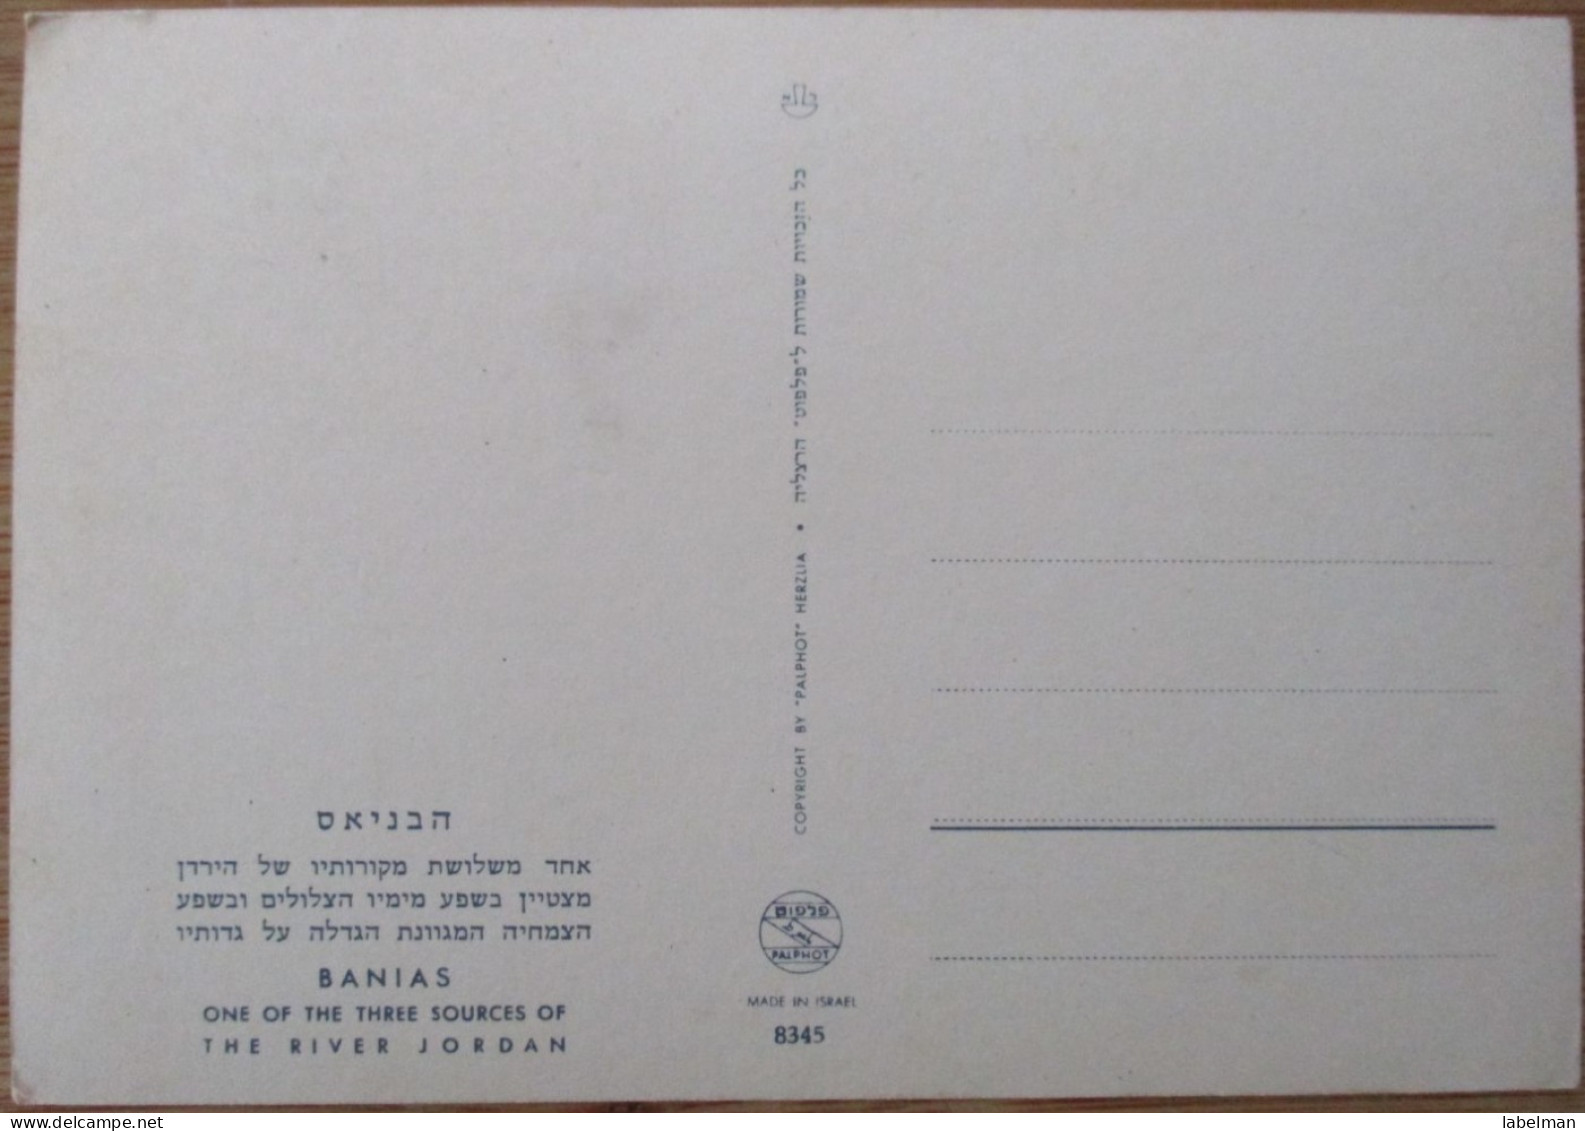 ISRAEL BANIAS JORDAN RIVER UPPER GALILEE POSTCARD ANSICHTSKARTE CARTE POSTALE CARTOLINA POSTKARTE CARD KARTE - Israel